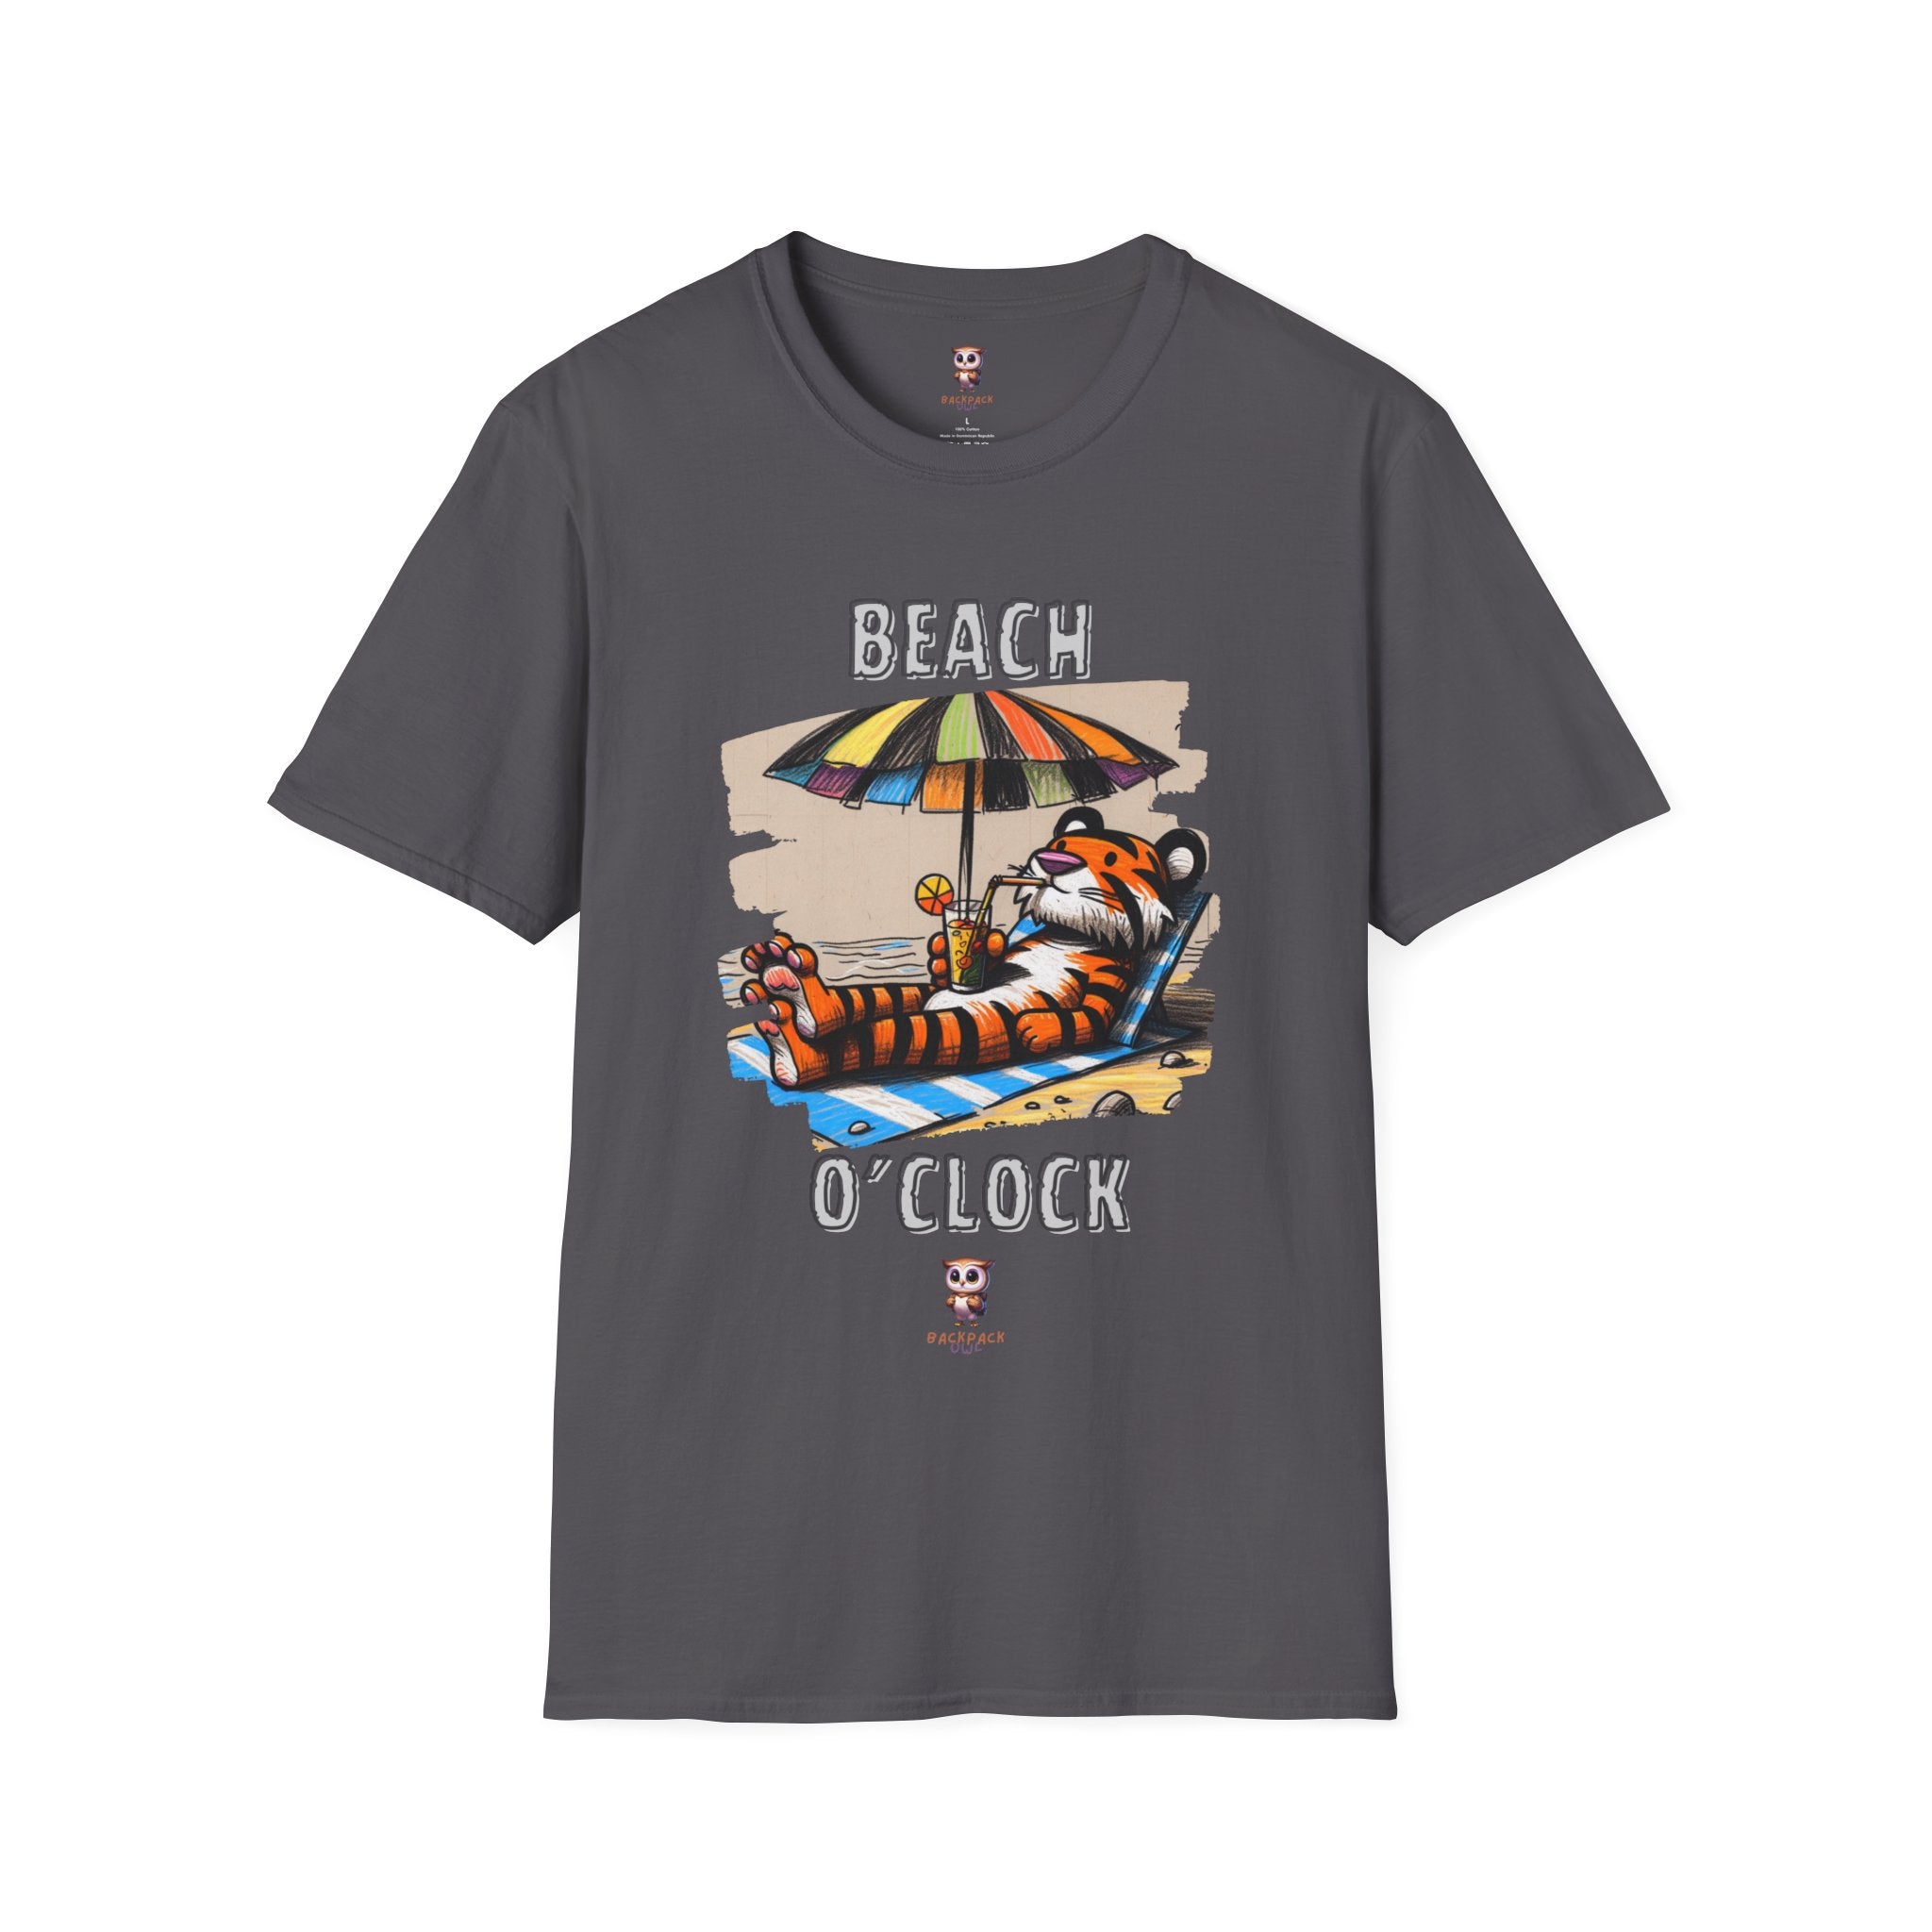 Beach O'Clock - Camiseta unisex de estilo suave